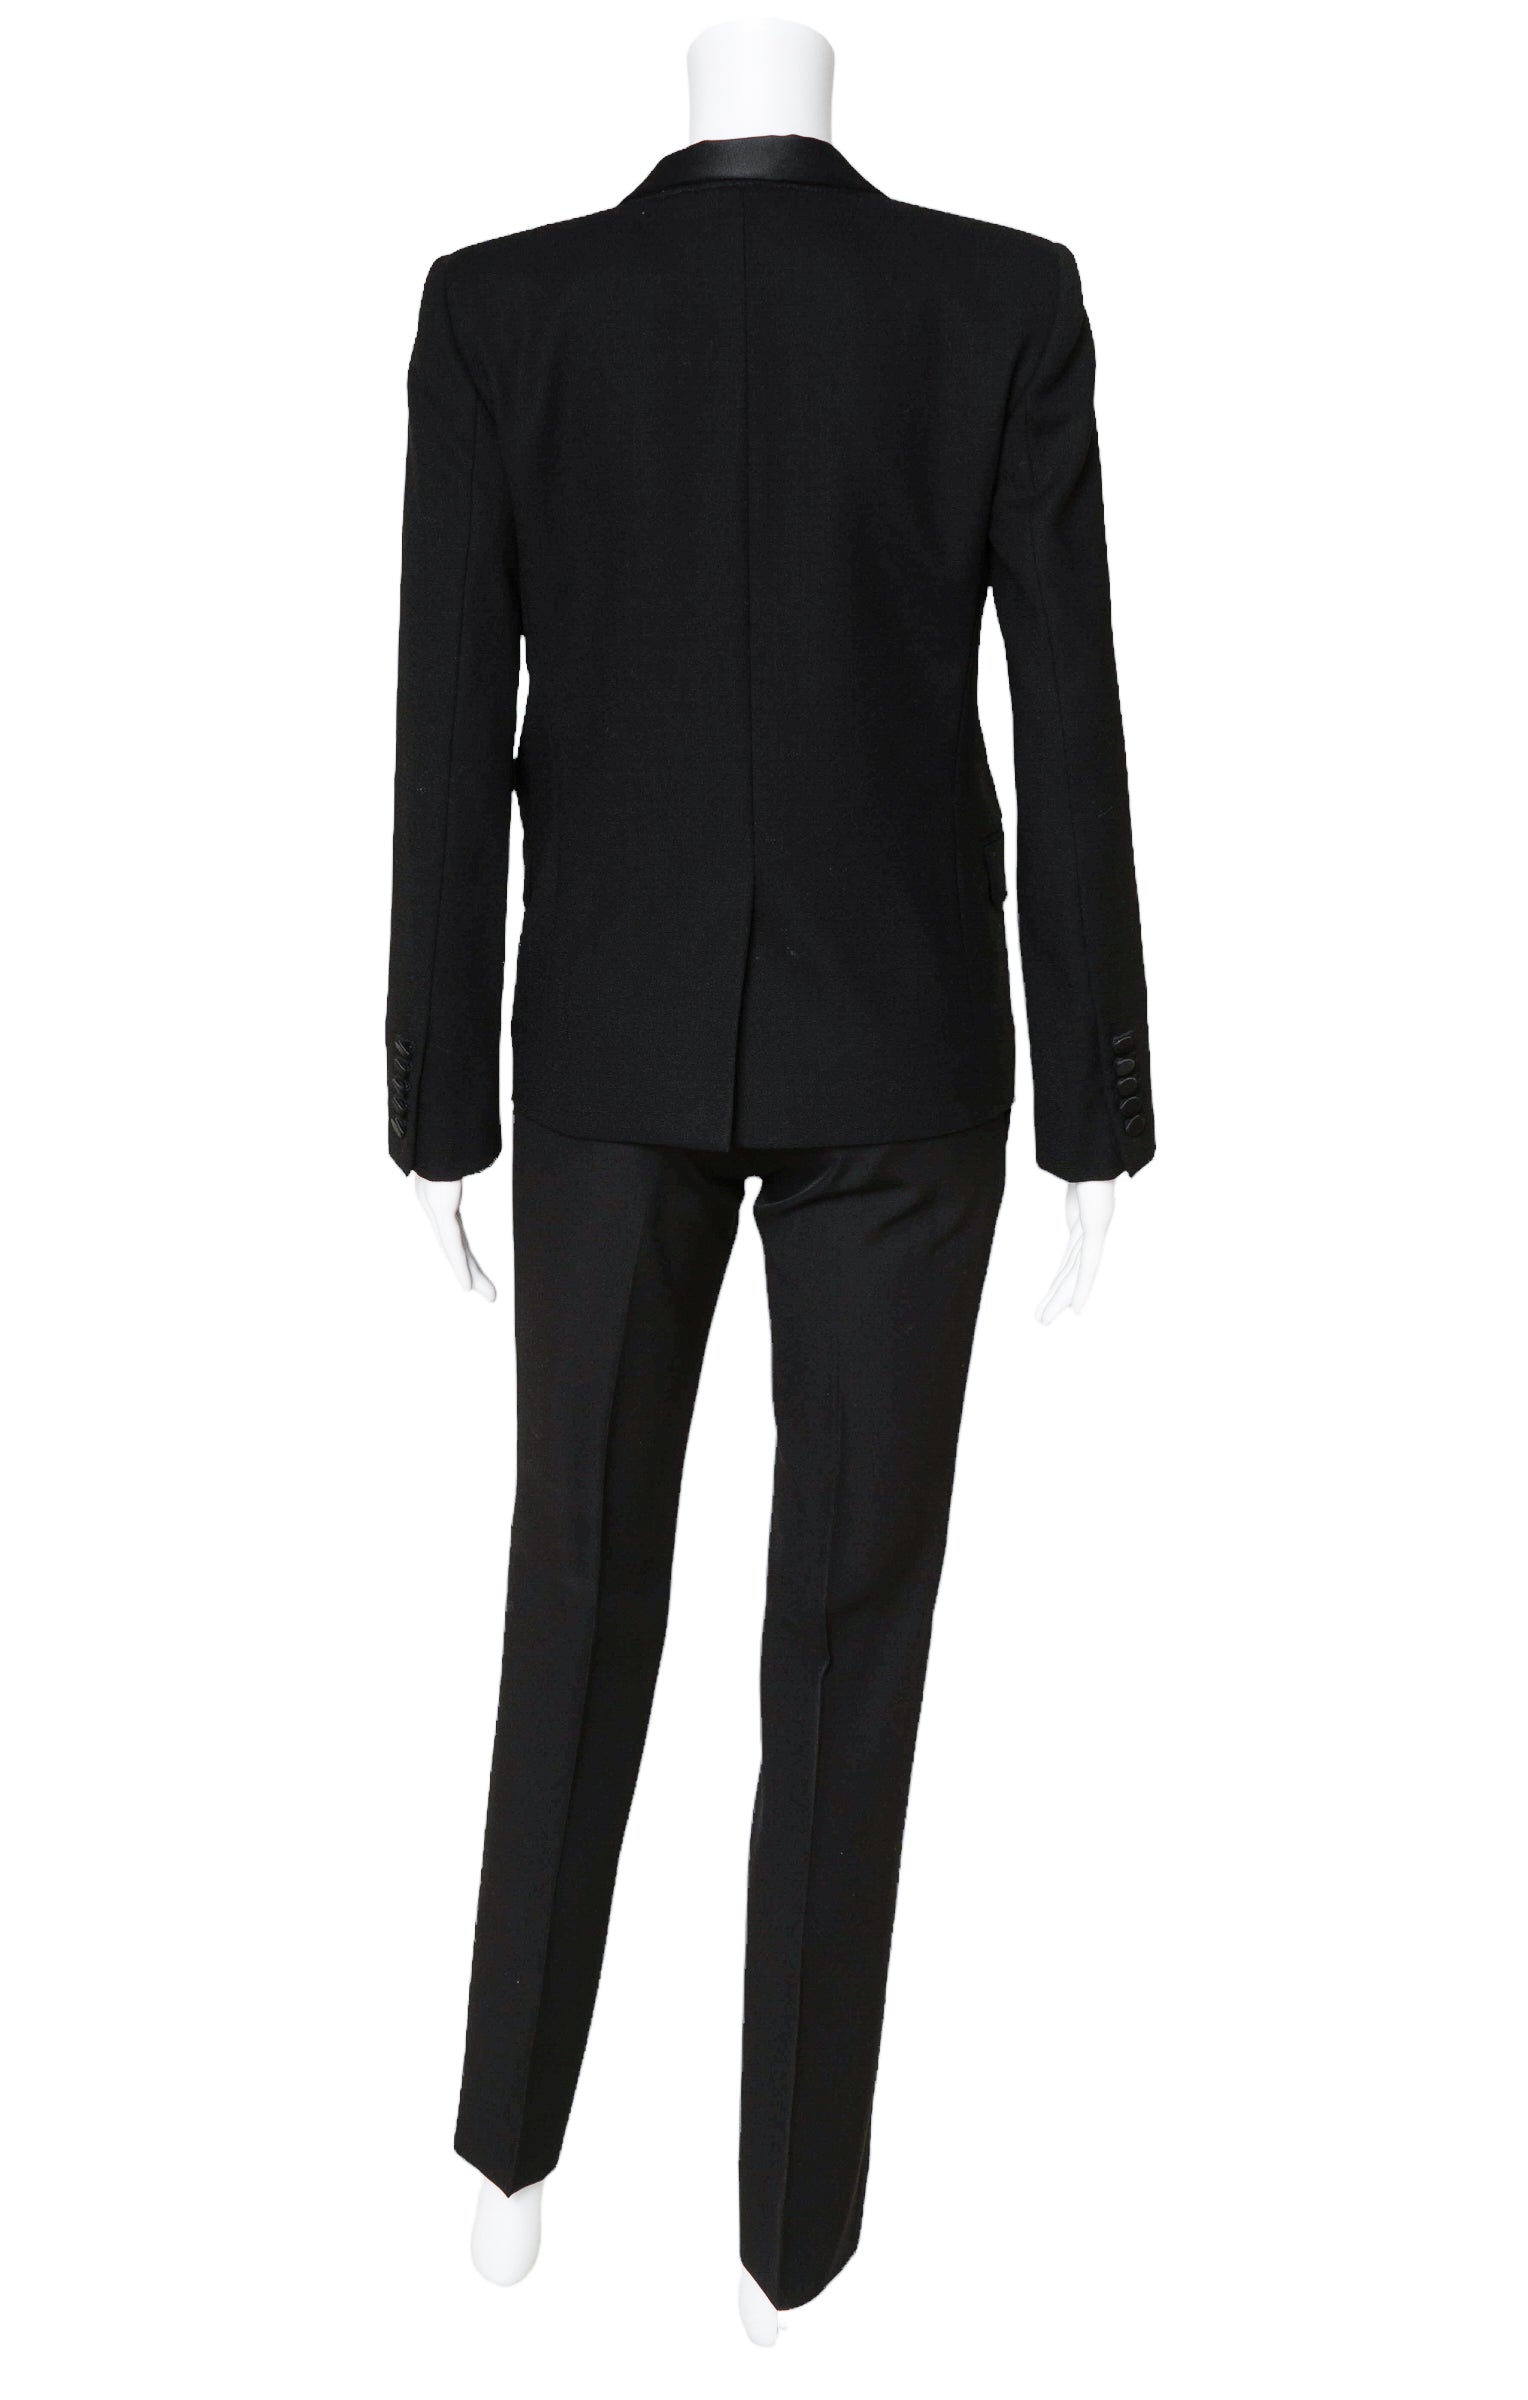 SAINT LAURENT (RARE) Suit Size: Jacket - FR 36 / Comparable to US 2-4 Pants - FR 34 / Comparable to US 0-2